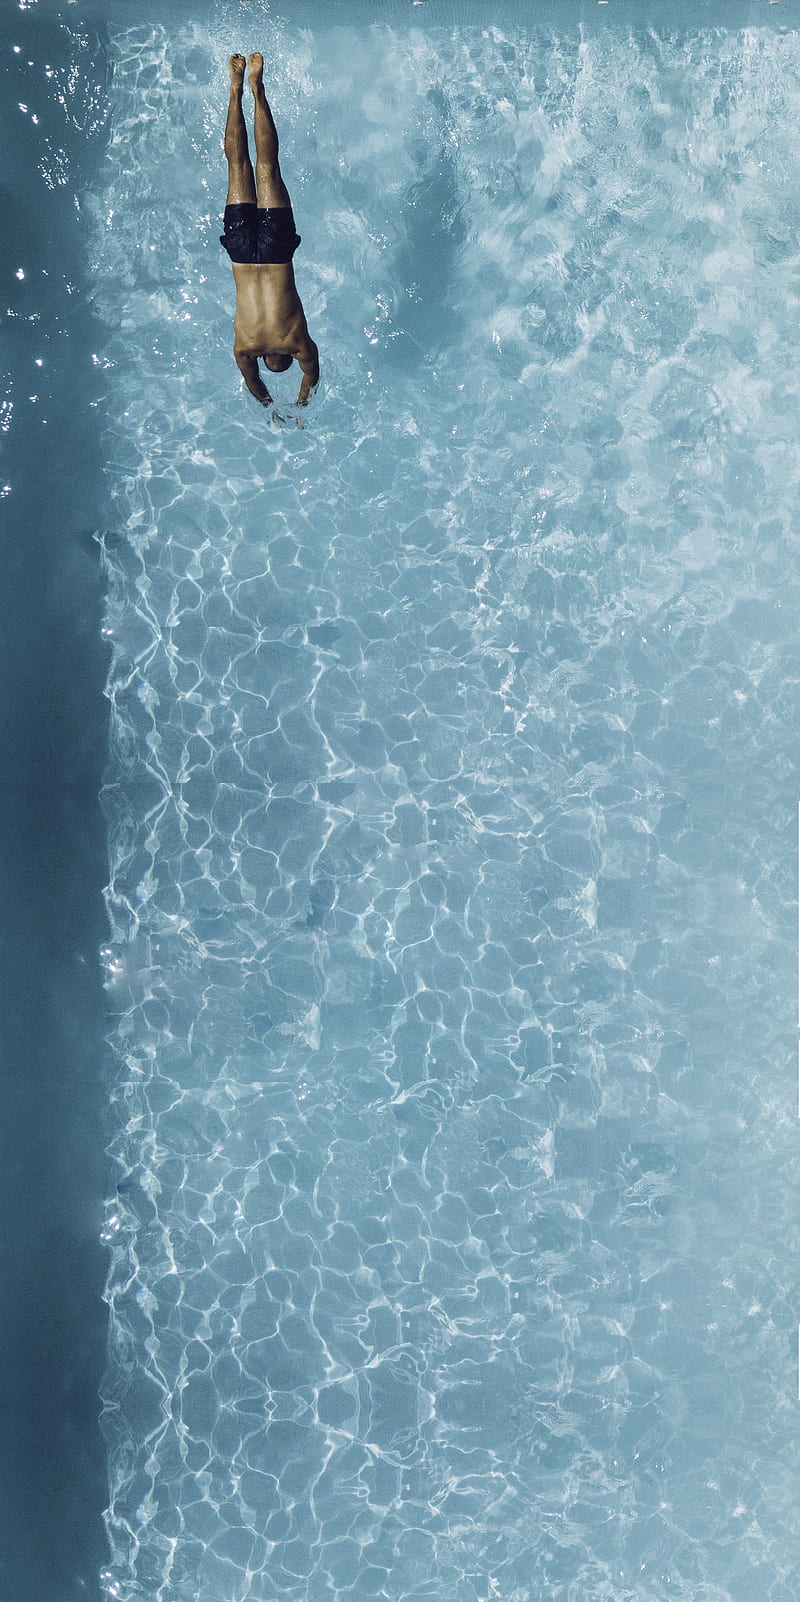 Olympic Swimming UHD 8K Wallpaper | Pixelz